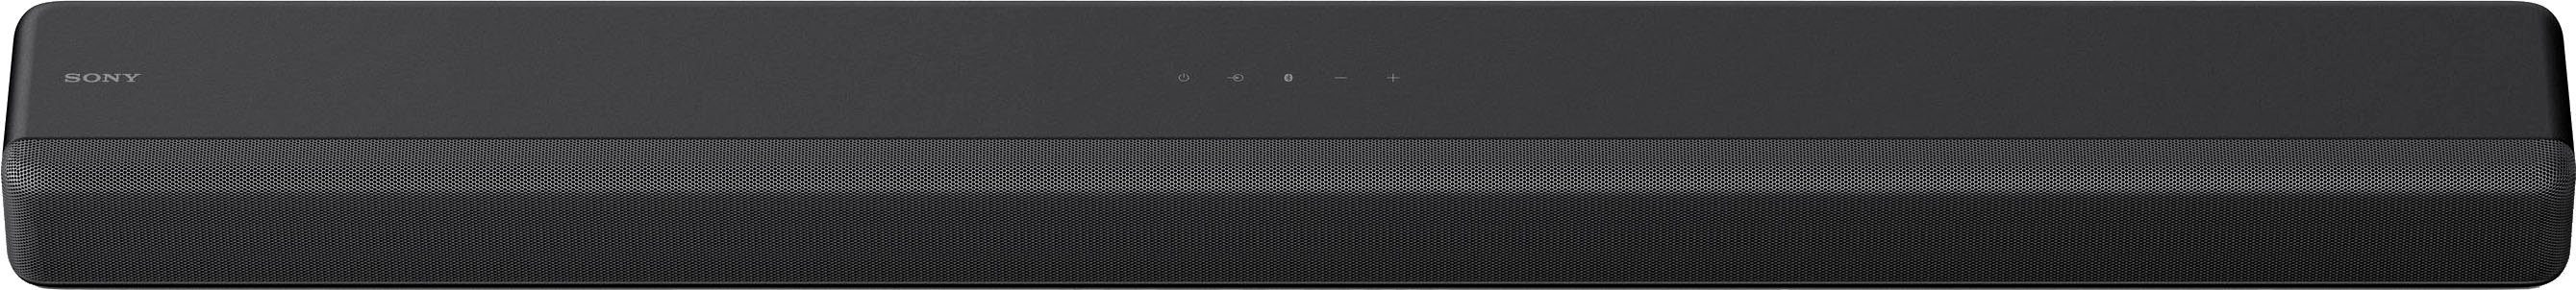 Subwoofer, HT-G700 W, Atmos) Sony Soundbar (Bluetooth, Dolby 3.1 mit 400